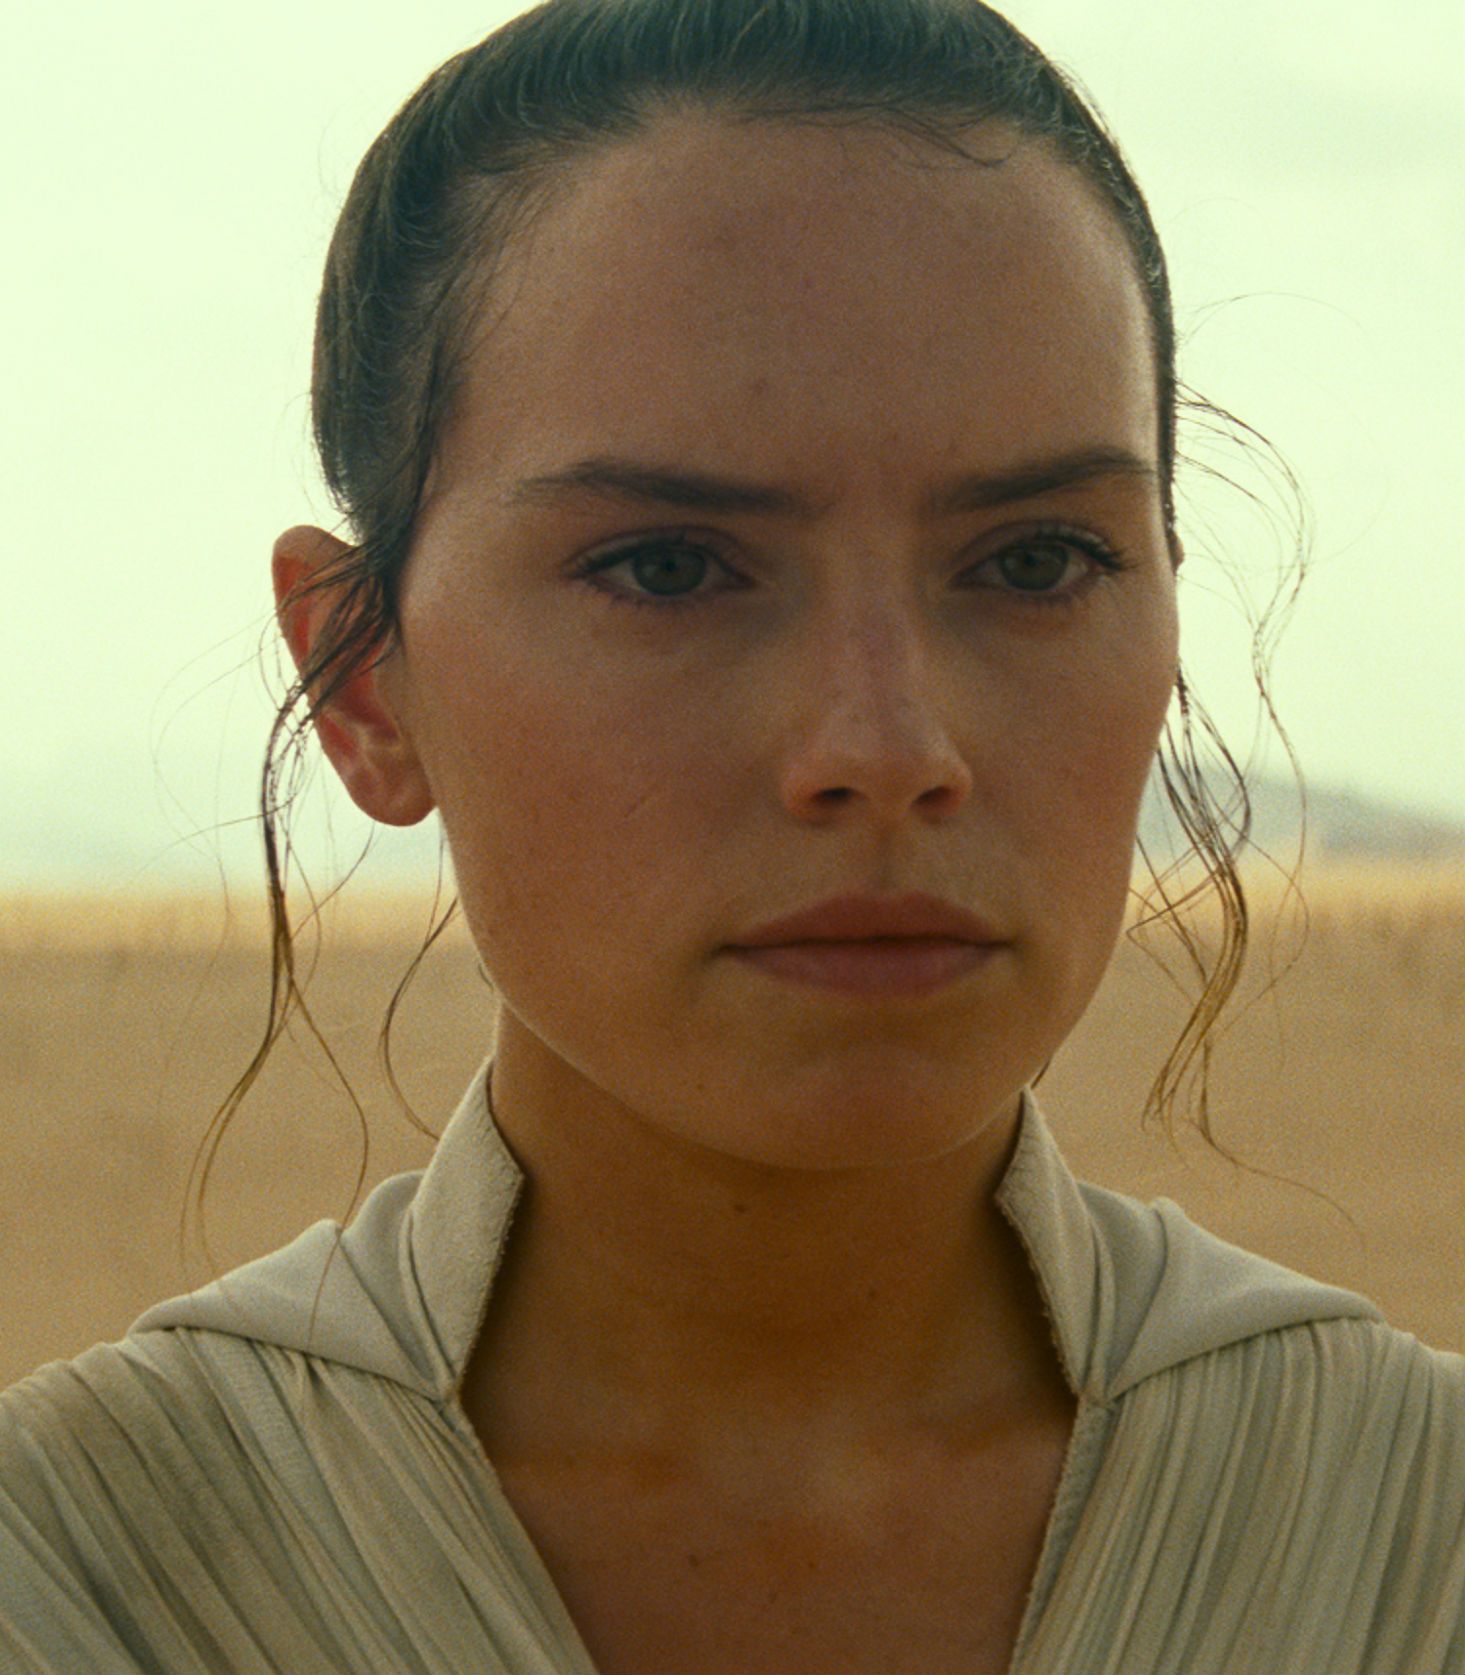 Star Wars The Rise of Skywalker Trailer - Rey on Desert Planet Vertical